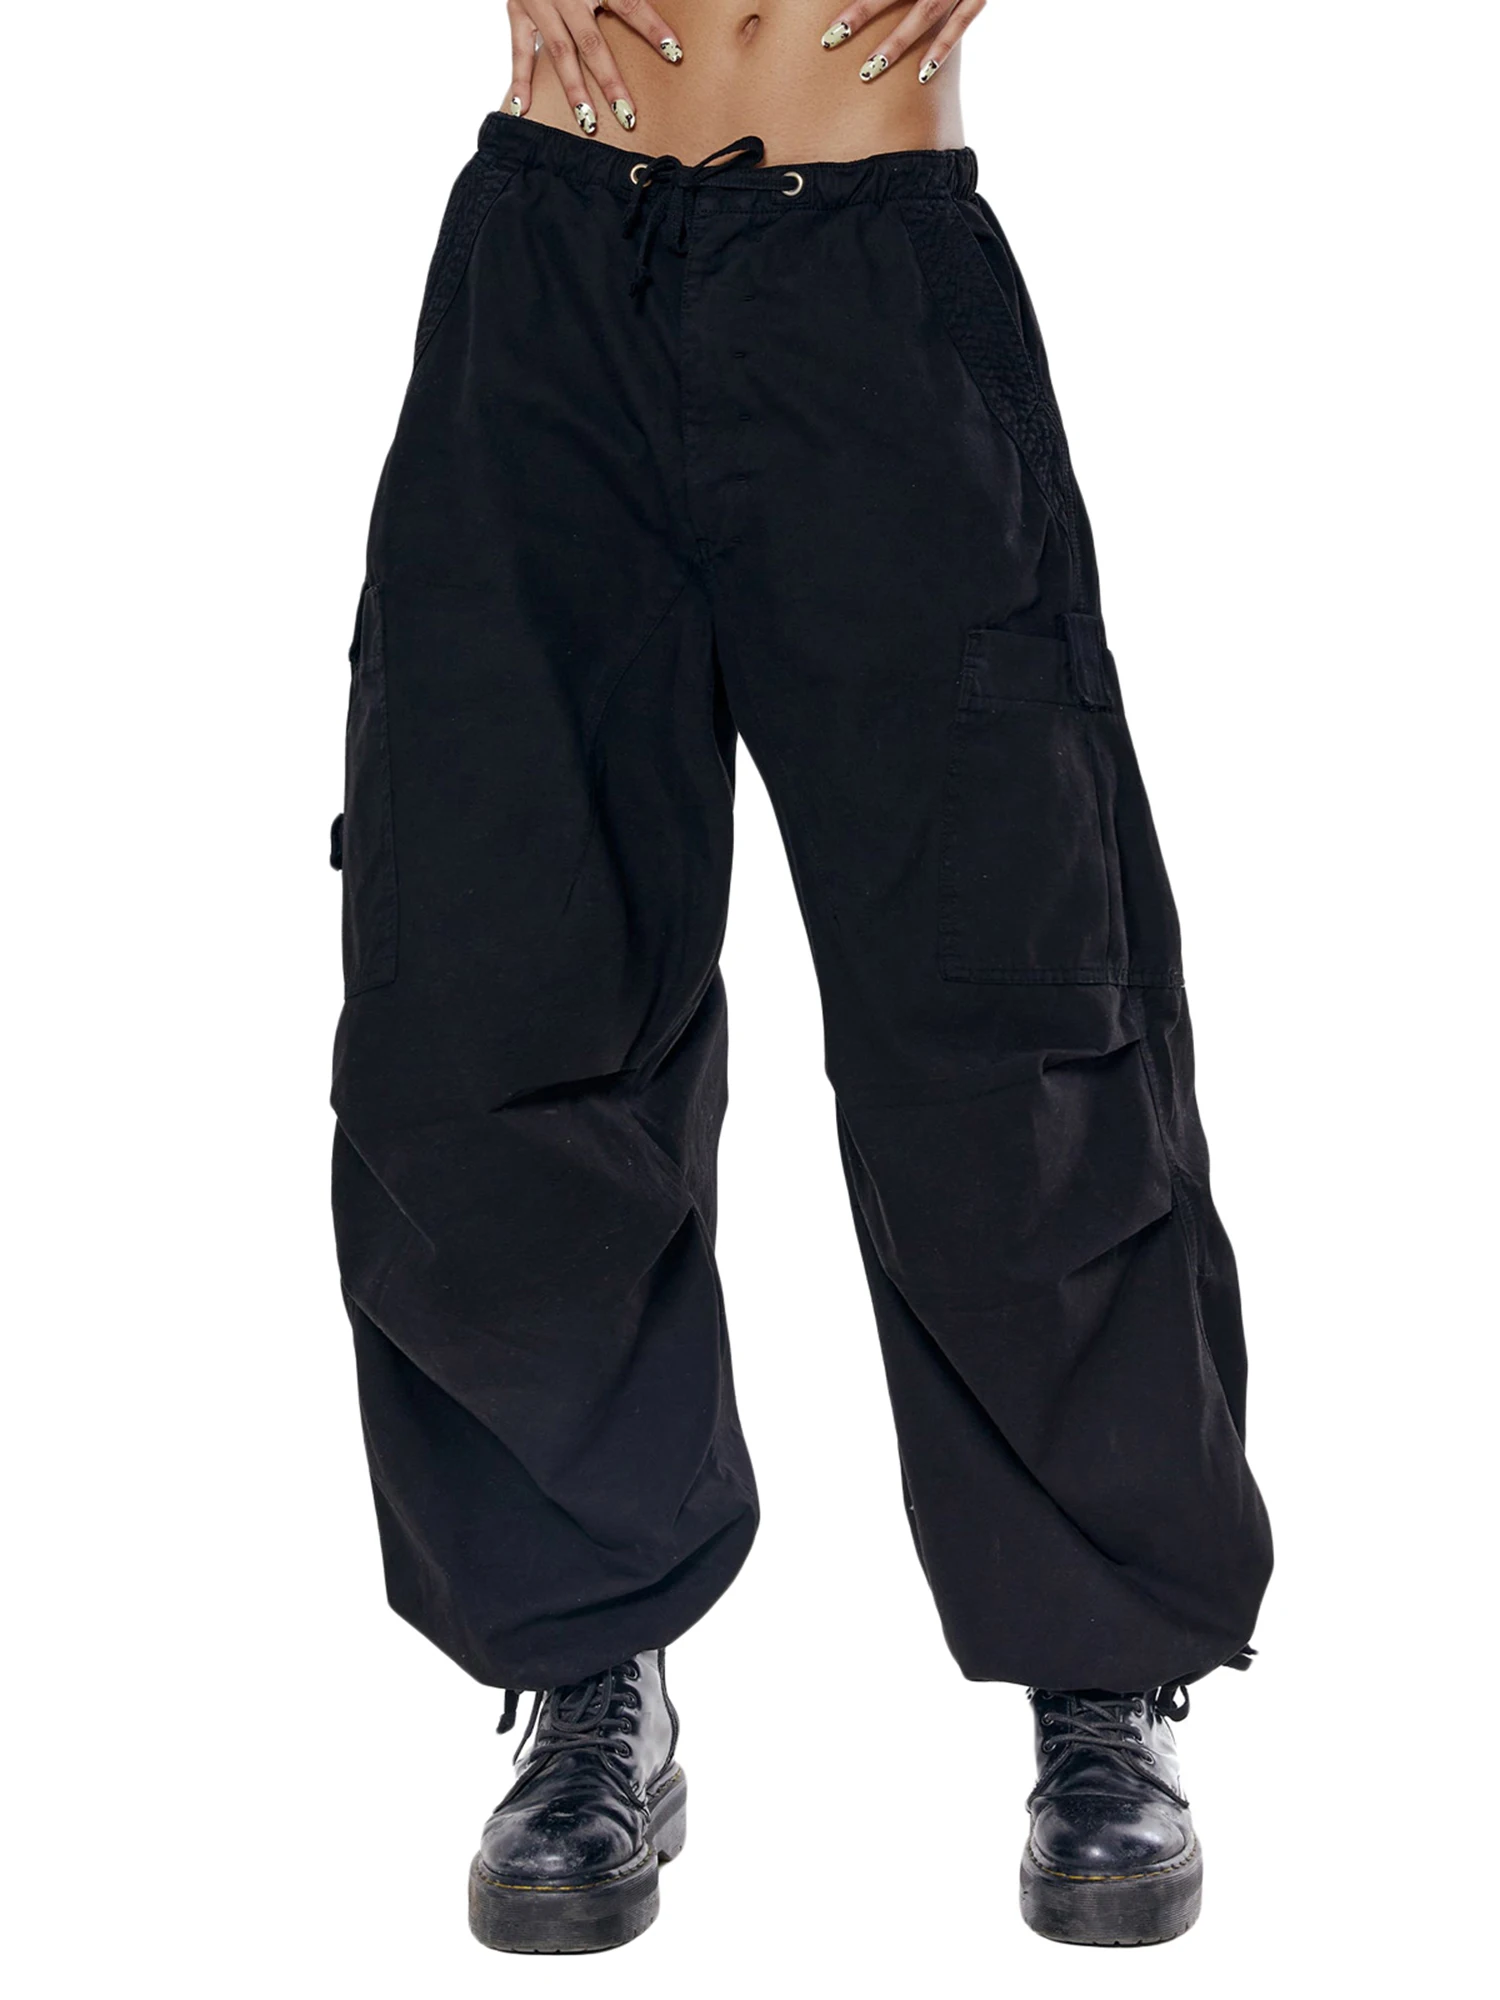 ZAFUL Women's Mid Rise Drawstring Cargo Pants Graphic Printed Windbreaker  Jogger Pants Loose Trousers